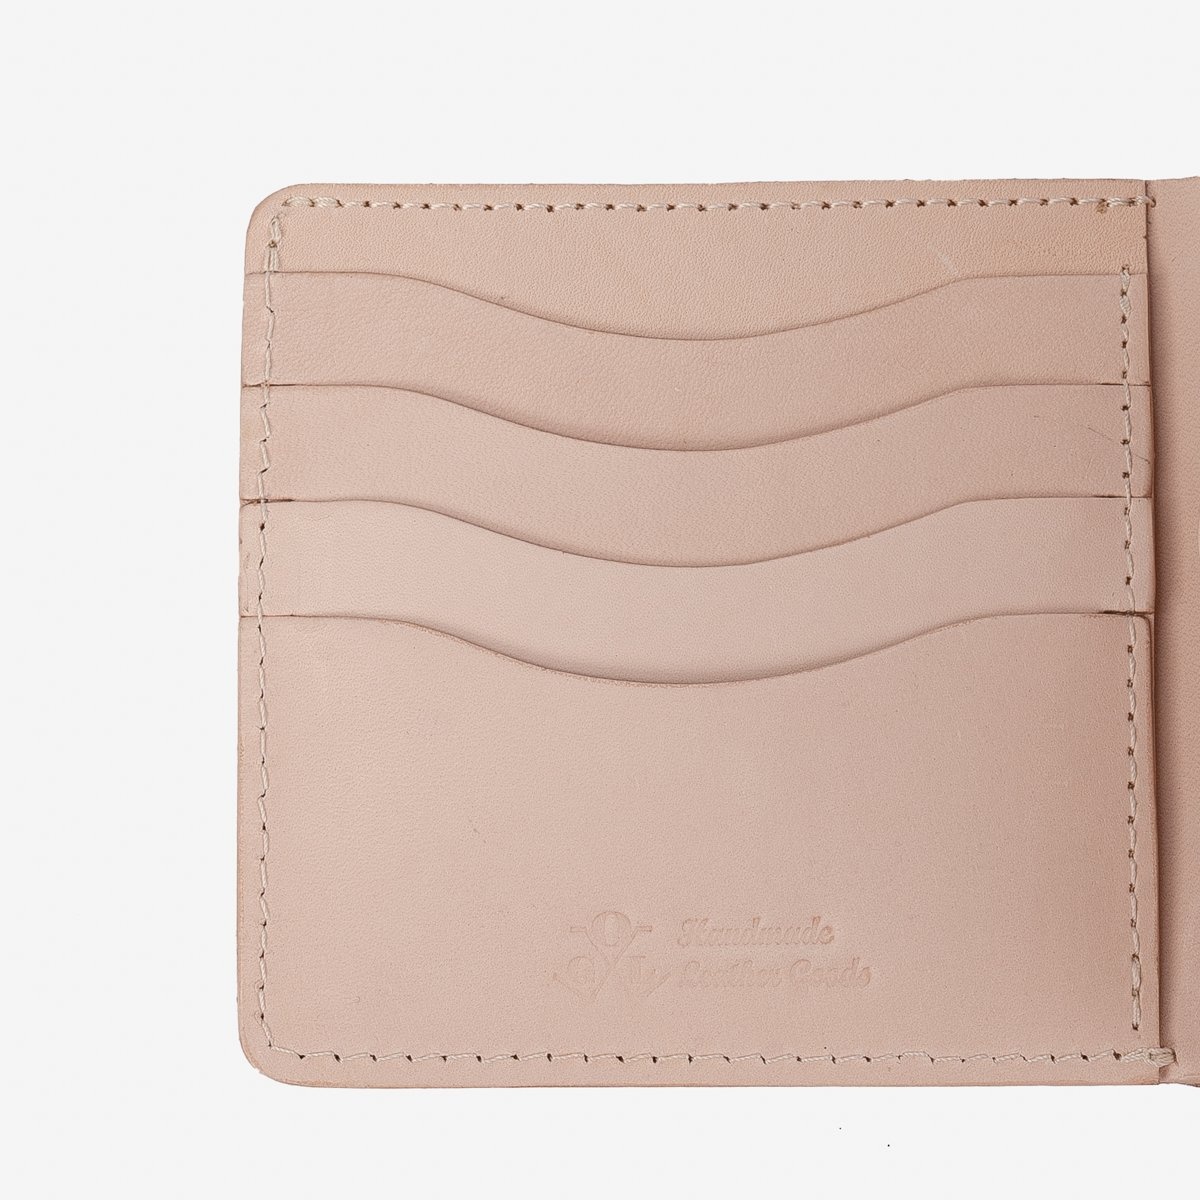 OGLH-KM-BFOLD-COIN-NAT OGL Kingsman Classic Bi-Fold Wallet with Coin Pocket and Arc Accent - Natural - 7